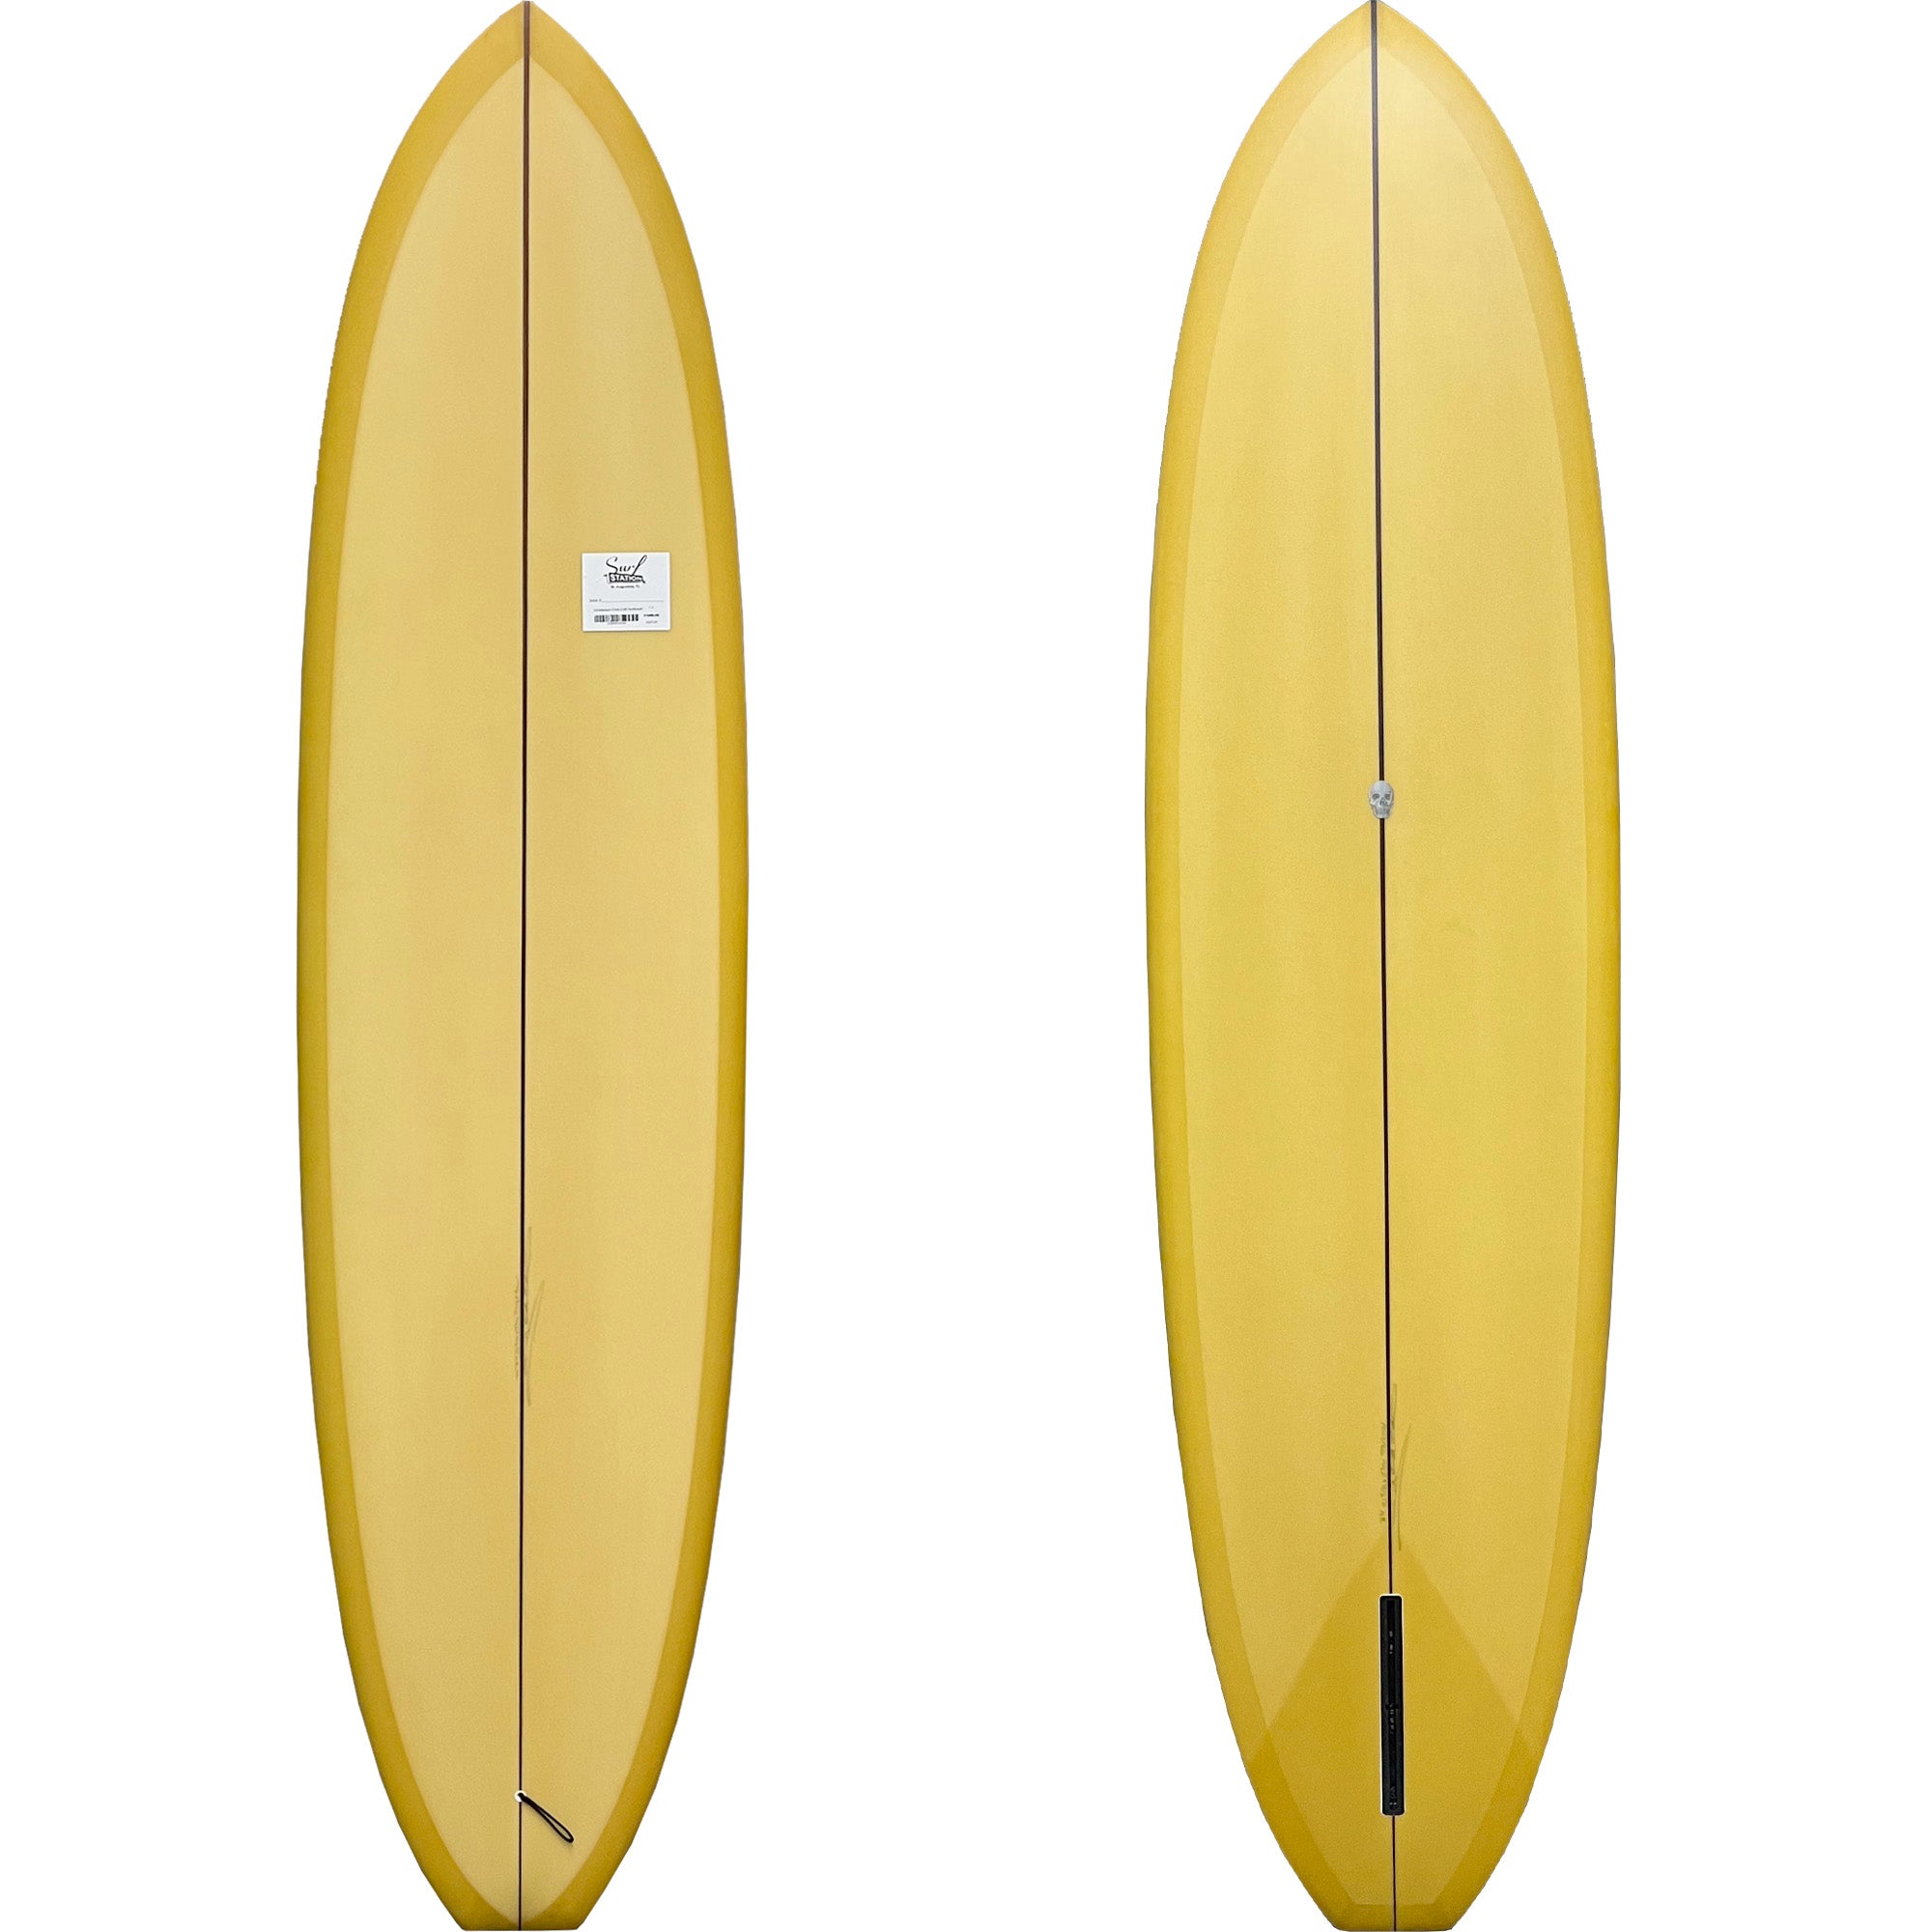 Christenson Chris Craft Surfboard